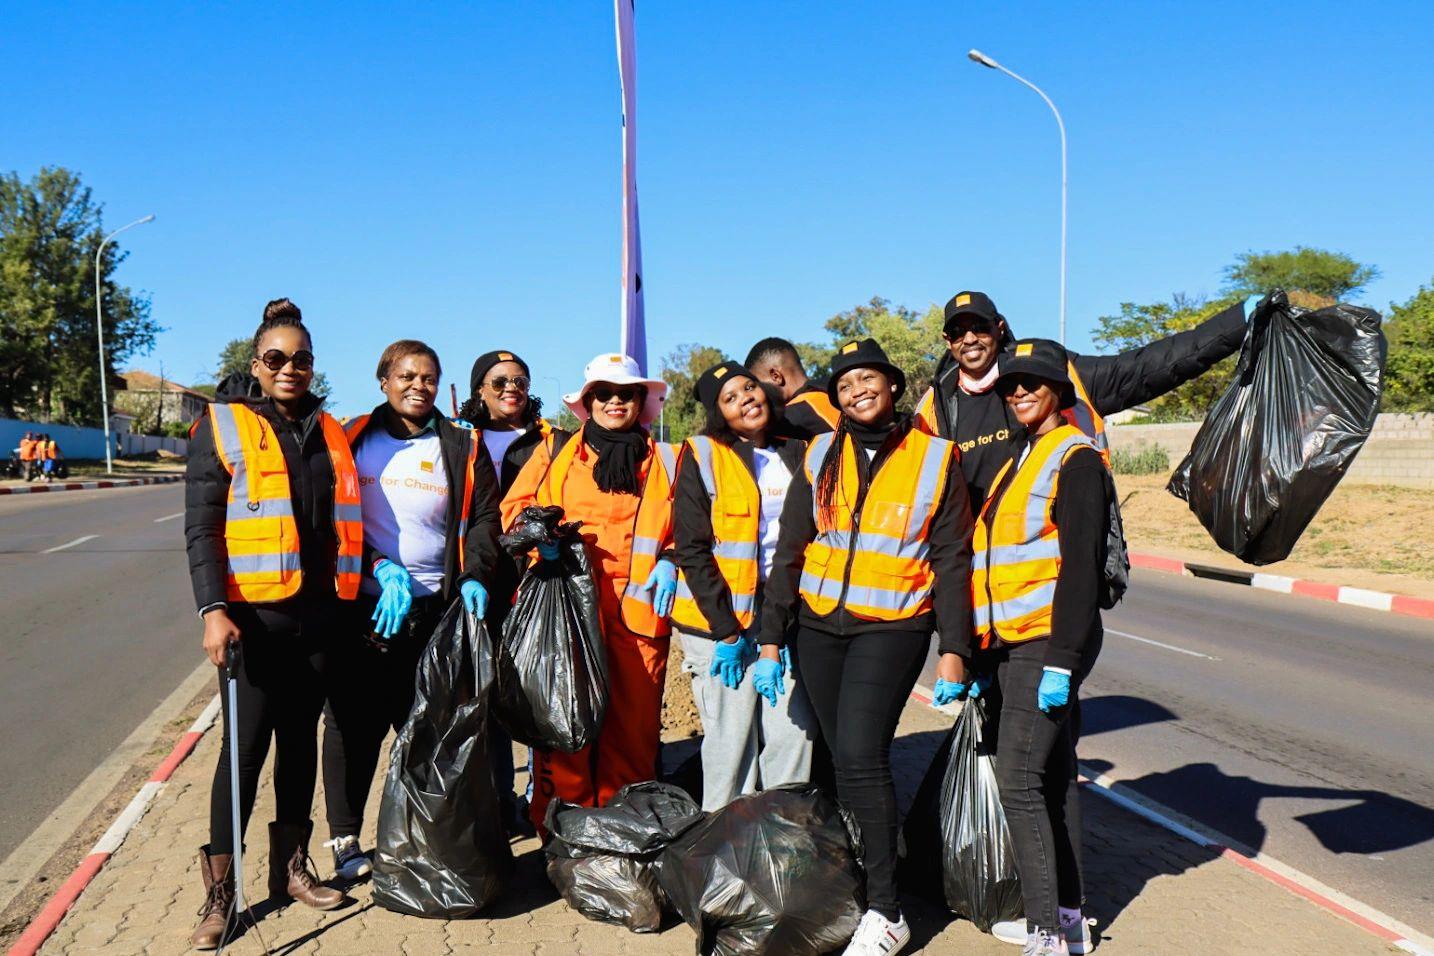 Orange Botswana Employees Lead Litter-Picking Drive in Maruapula for World Environment Day